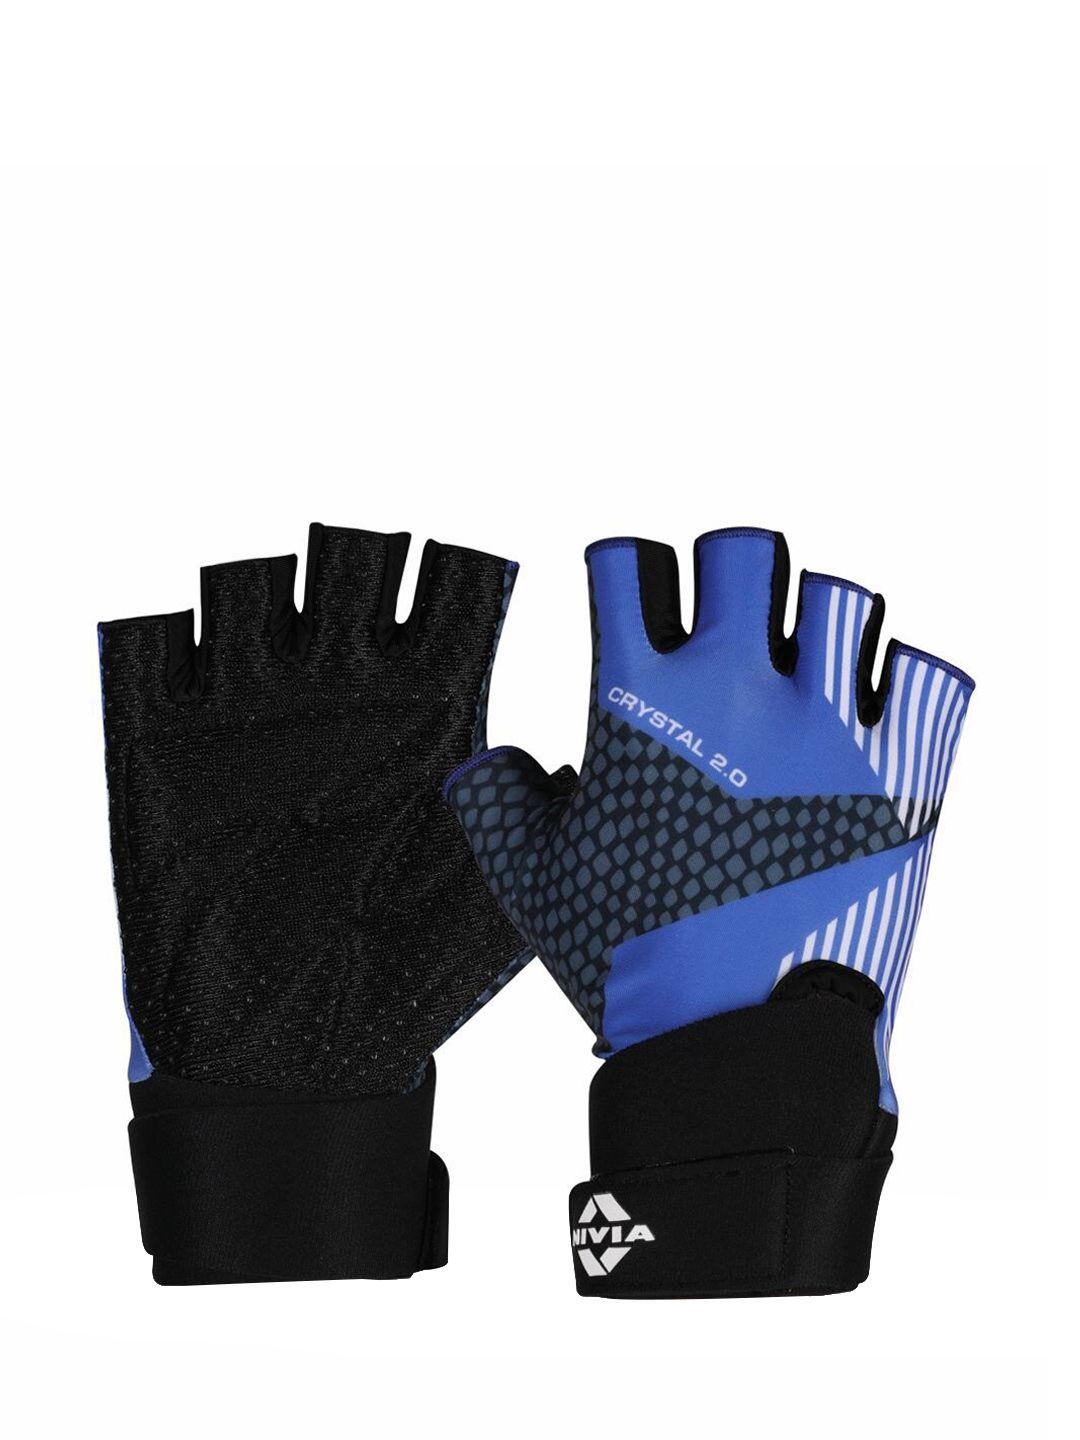 nivia printed strap fitness gloves